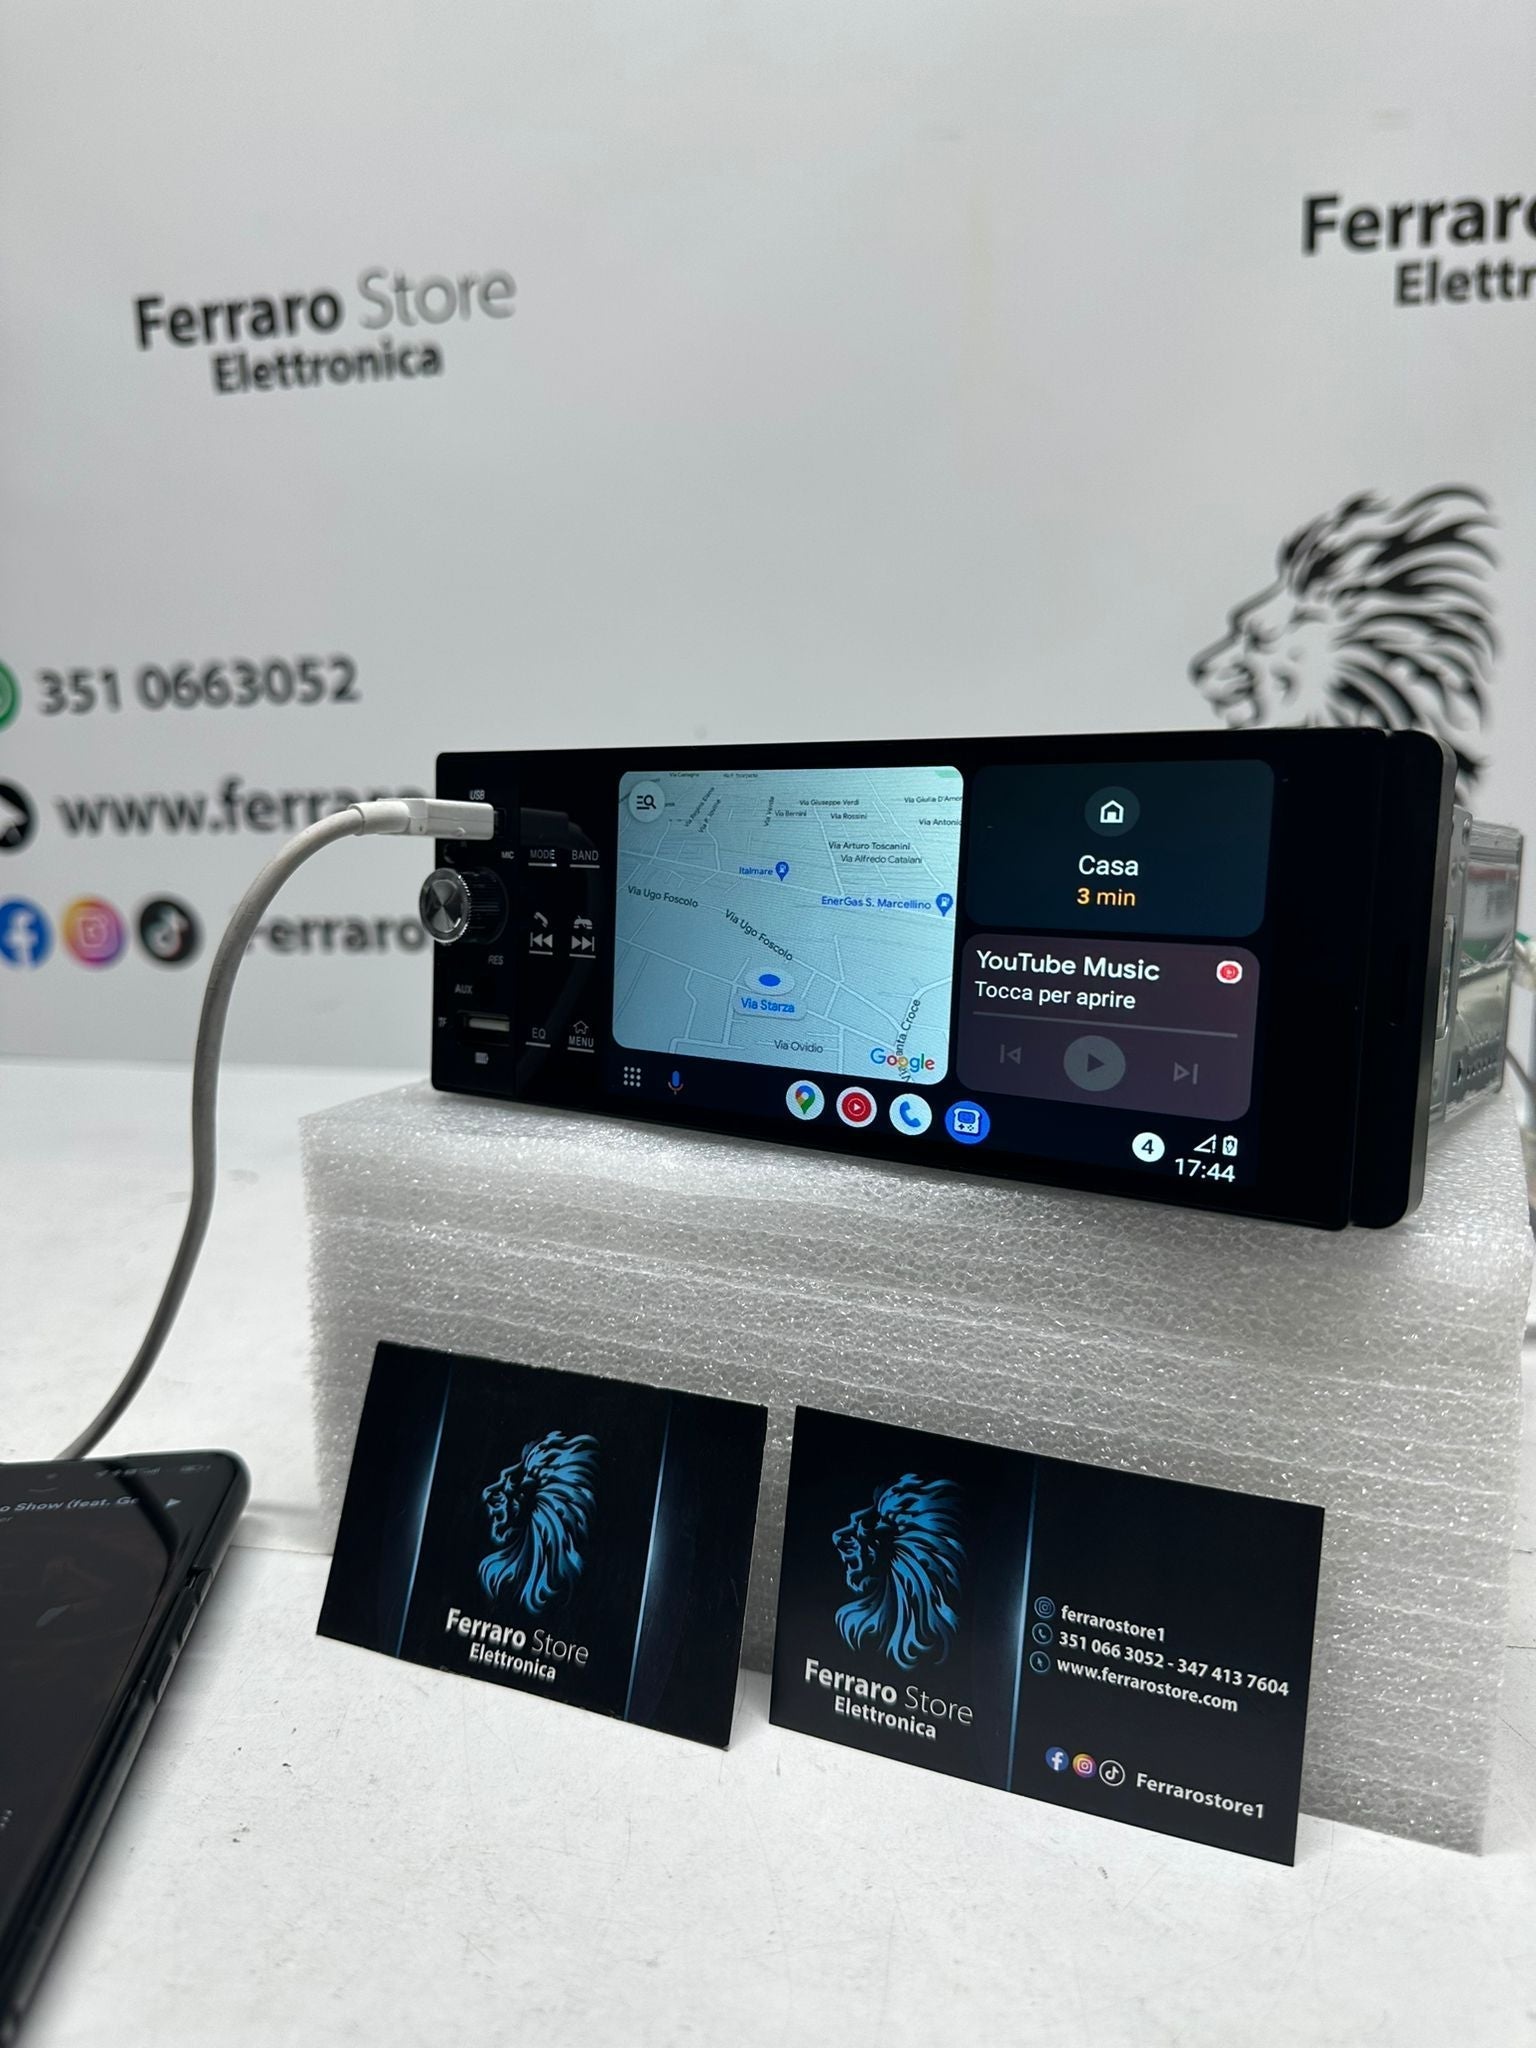 Autoradio per Lancia Y [2012-2020] - 1Din, Schermo 5.5"Pollici, Bluetooth, Radio, USB, CarPlay & Android Auto Cablato